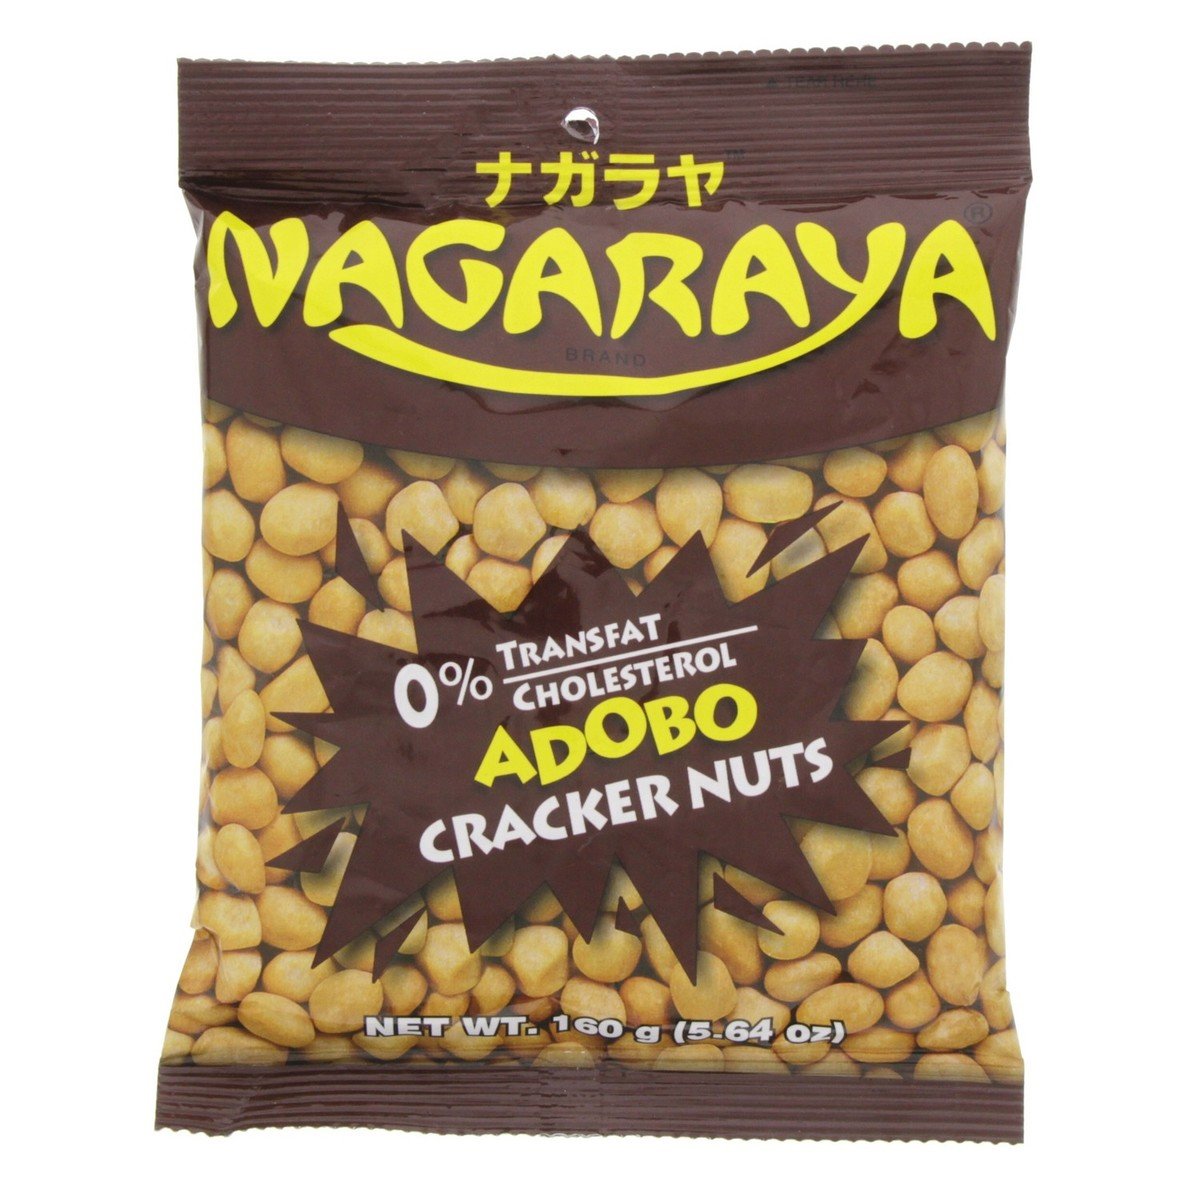 Nagaraya Adobo Cracker Nuts 160 g